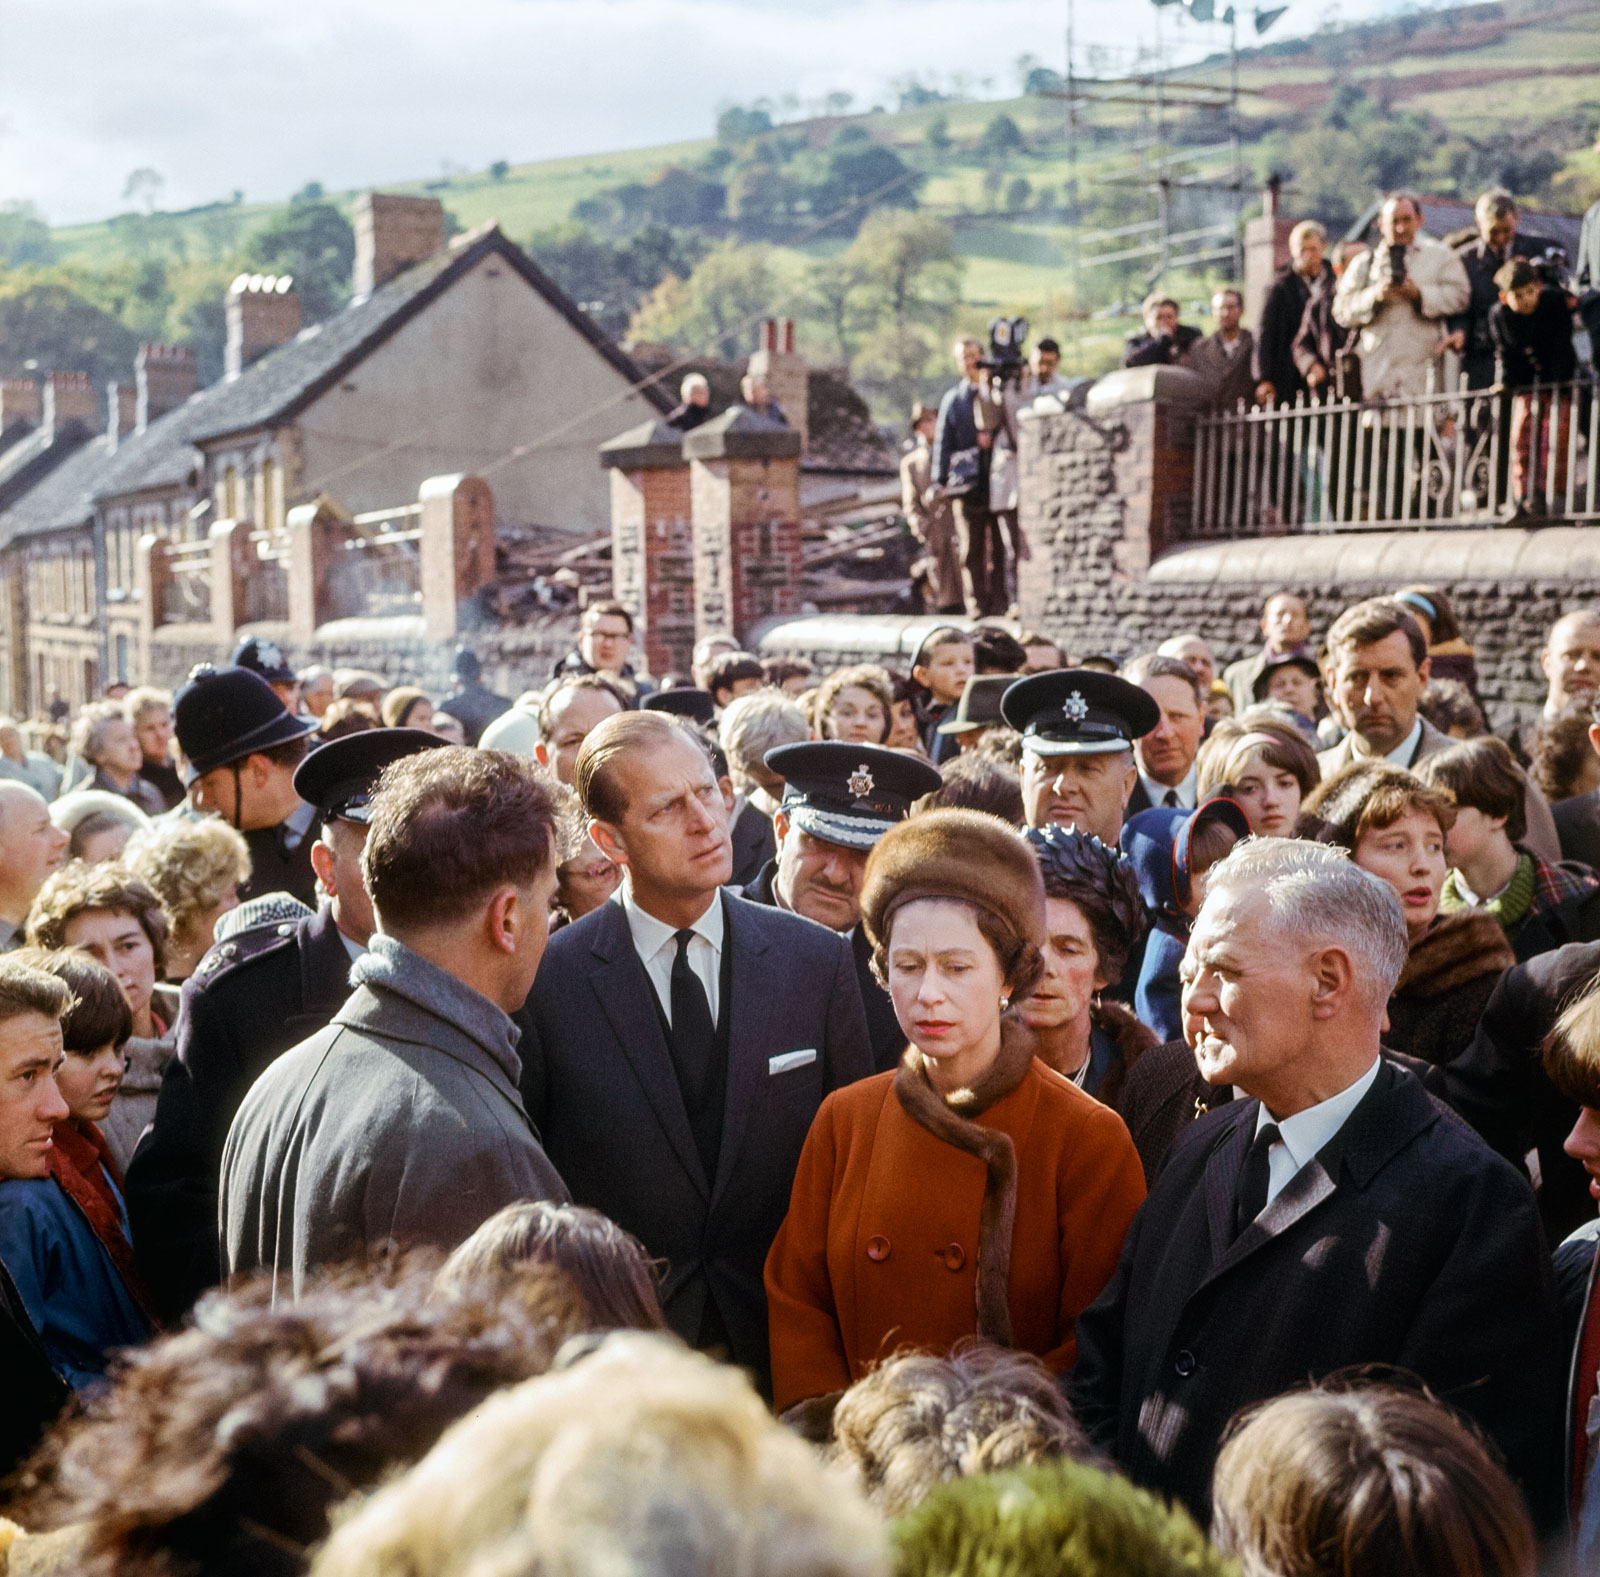  Mirrorpix //Caption: Επίσκεψη στο χωριό των ανθρακωρύχων στο Aberfan της Ουαλίας, μετά την κατάρρευση στοάς που στοίχισε τη ζωή 144 ανθρώπων, το 1966. Photo: ανώνυμος